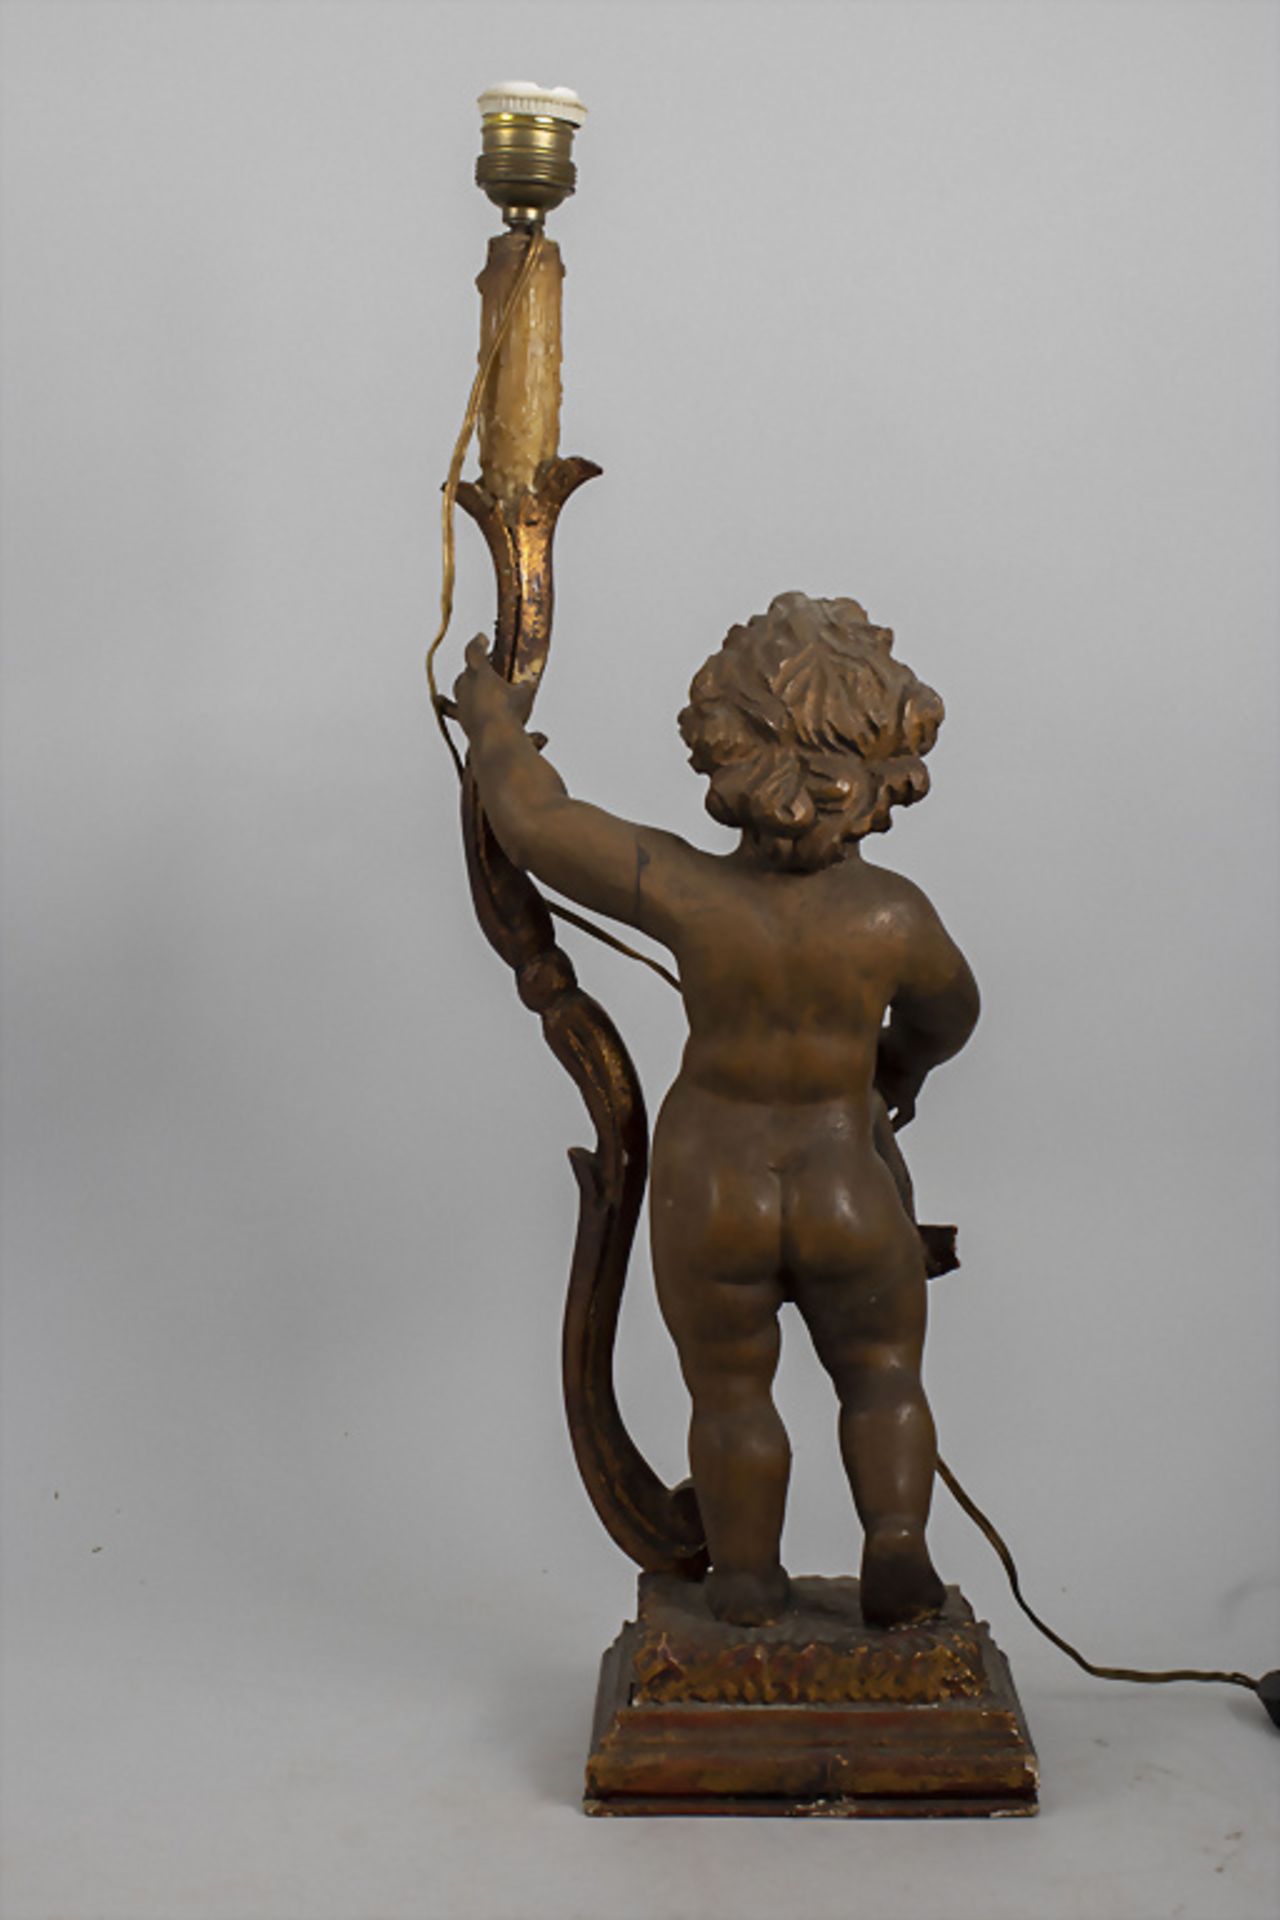 Figurenlampe 'Putto' / A figural lamp 'Cherub' - Image 5 of 9